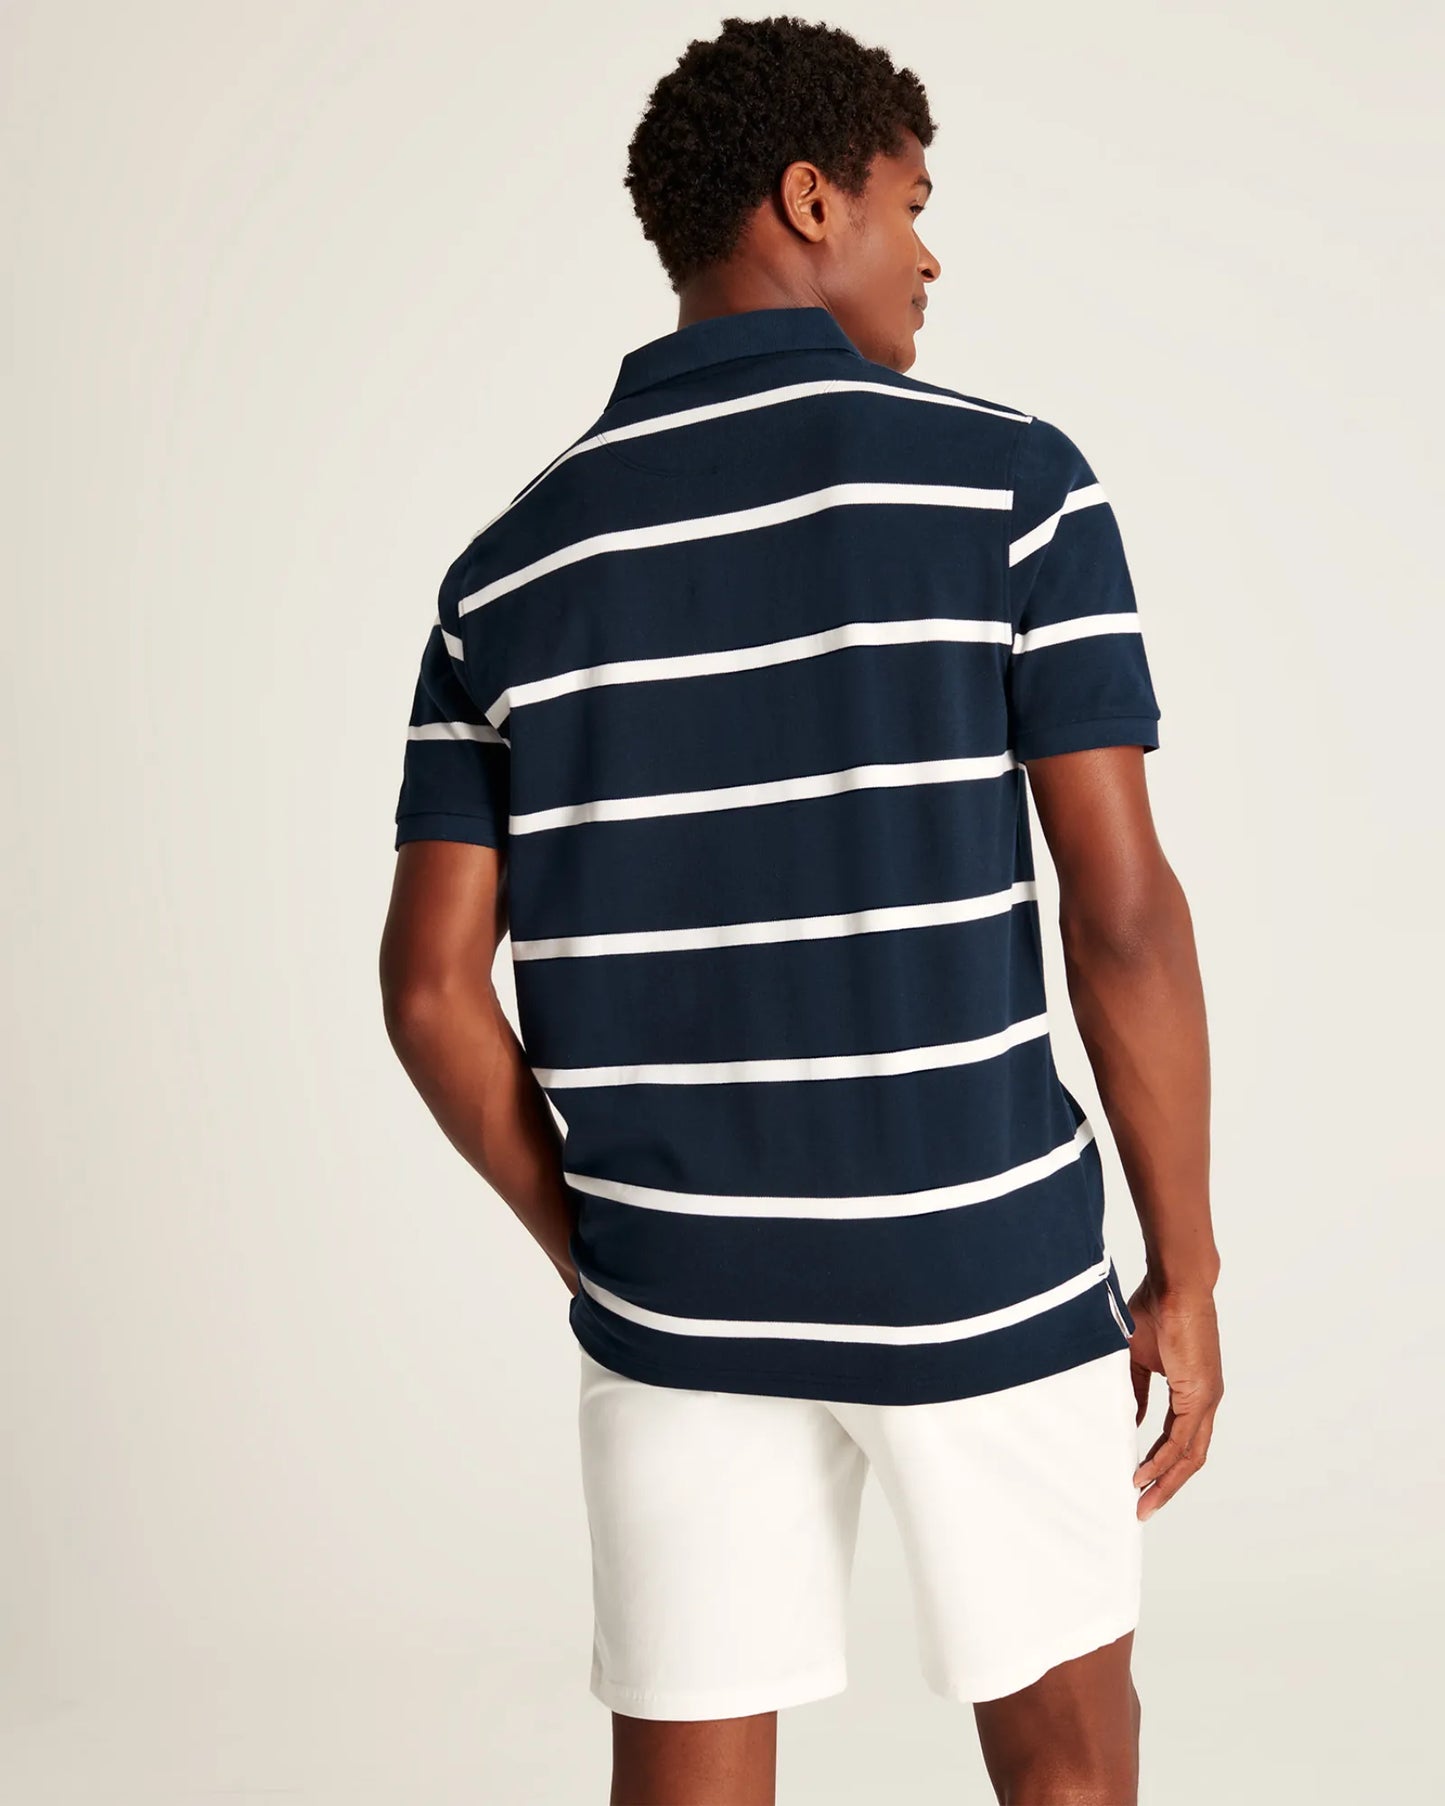 Filbert Classic Fit Striped Polo Shirt - Navy White Stripe